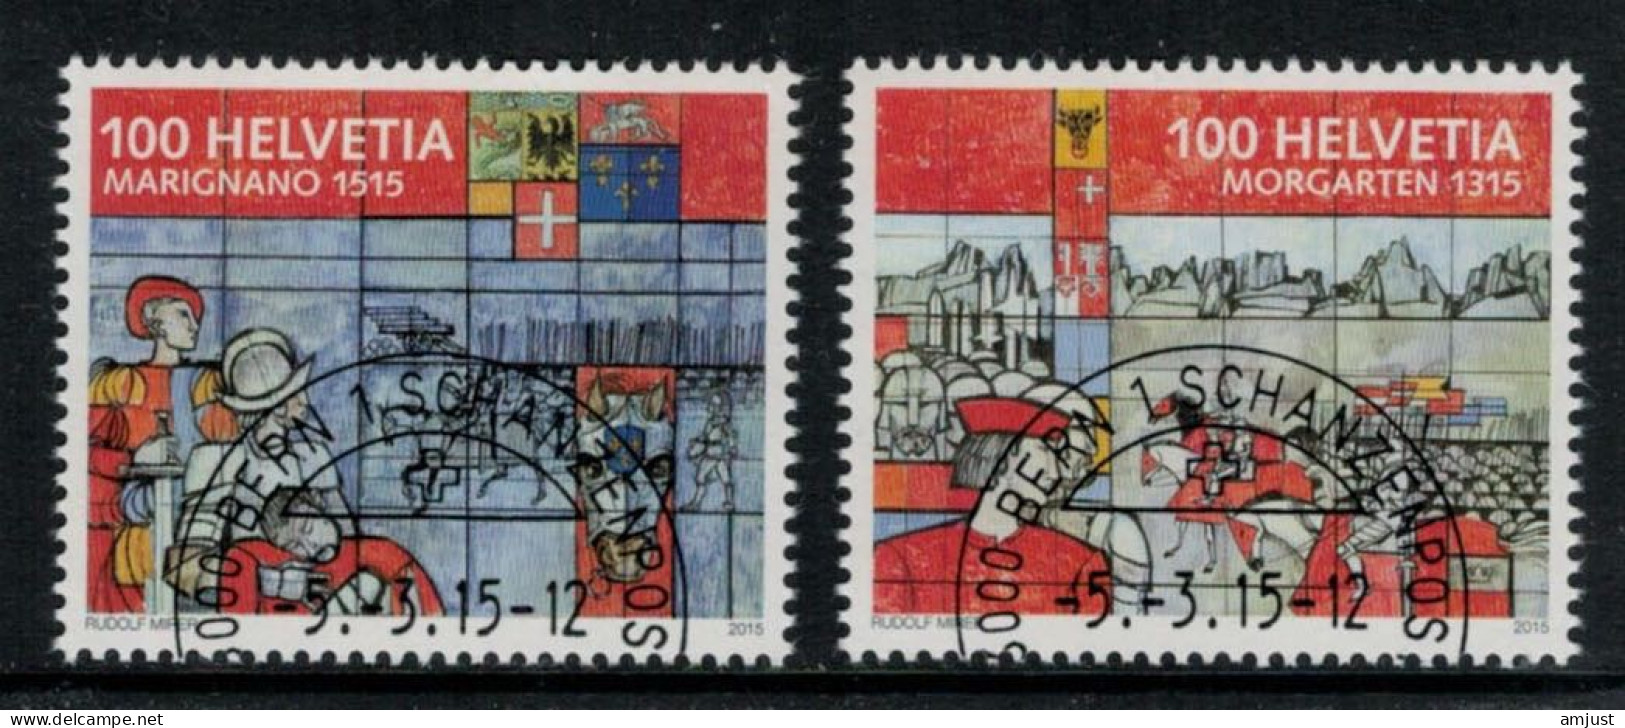 Suisse // Schweiz // Switzerland // 2010-2017 // 2015 // Évènements Historiques No. 1546-1547 - Used Stamps